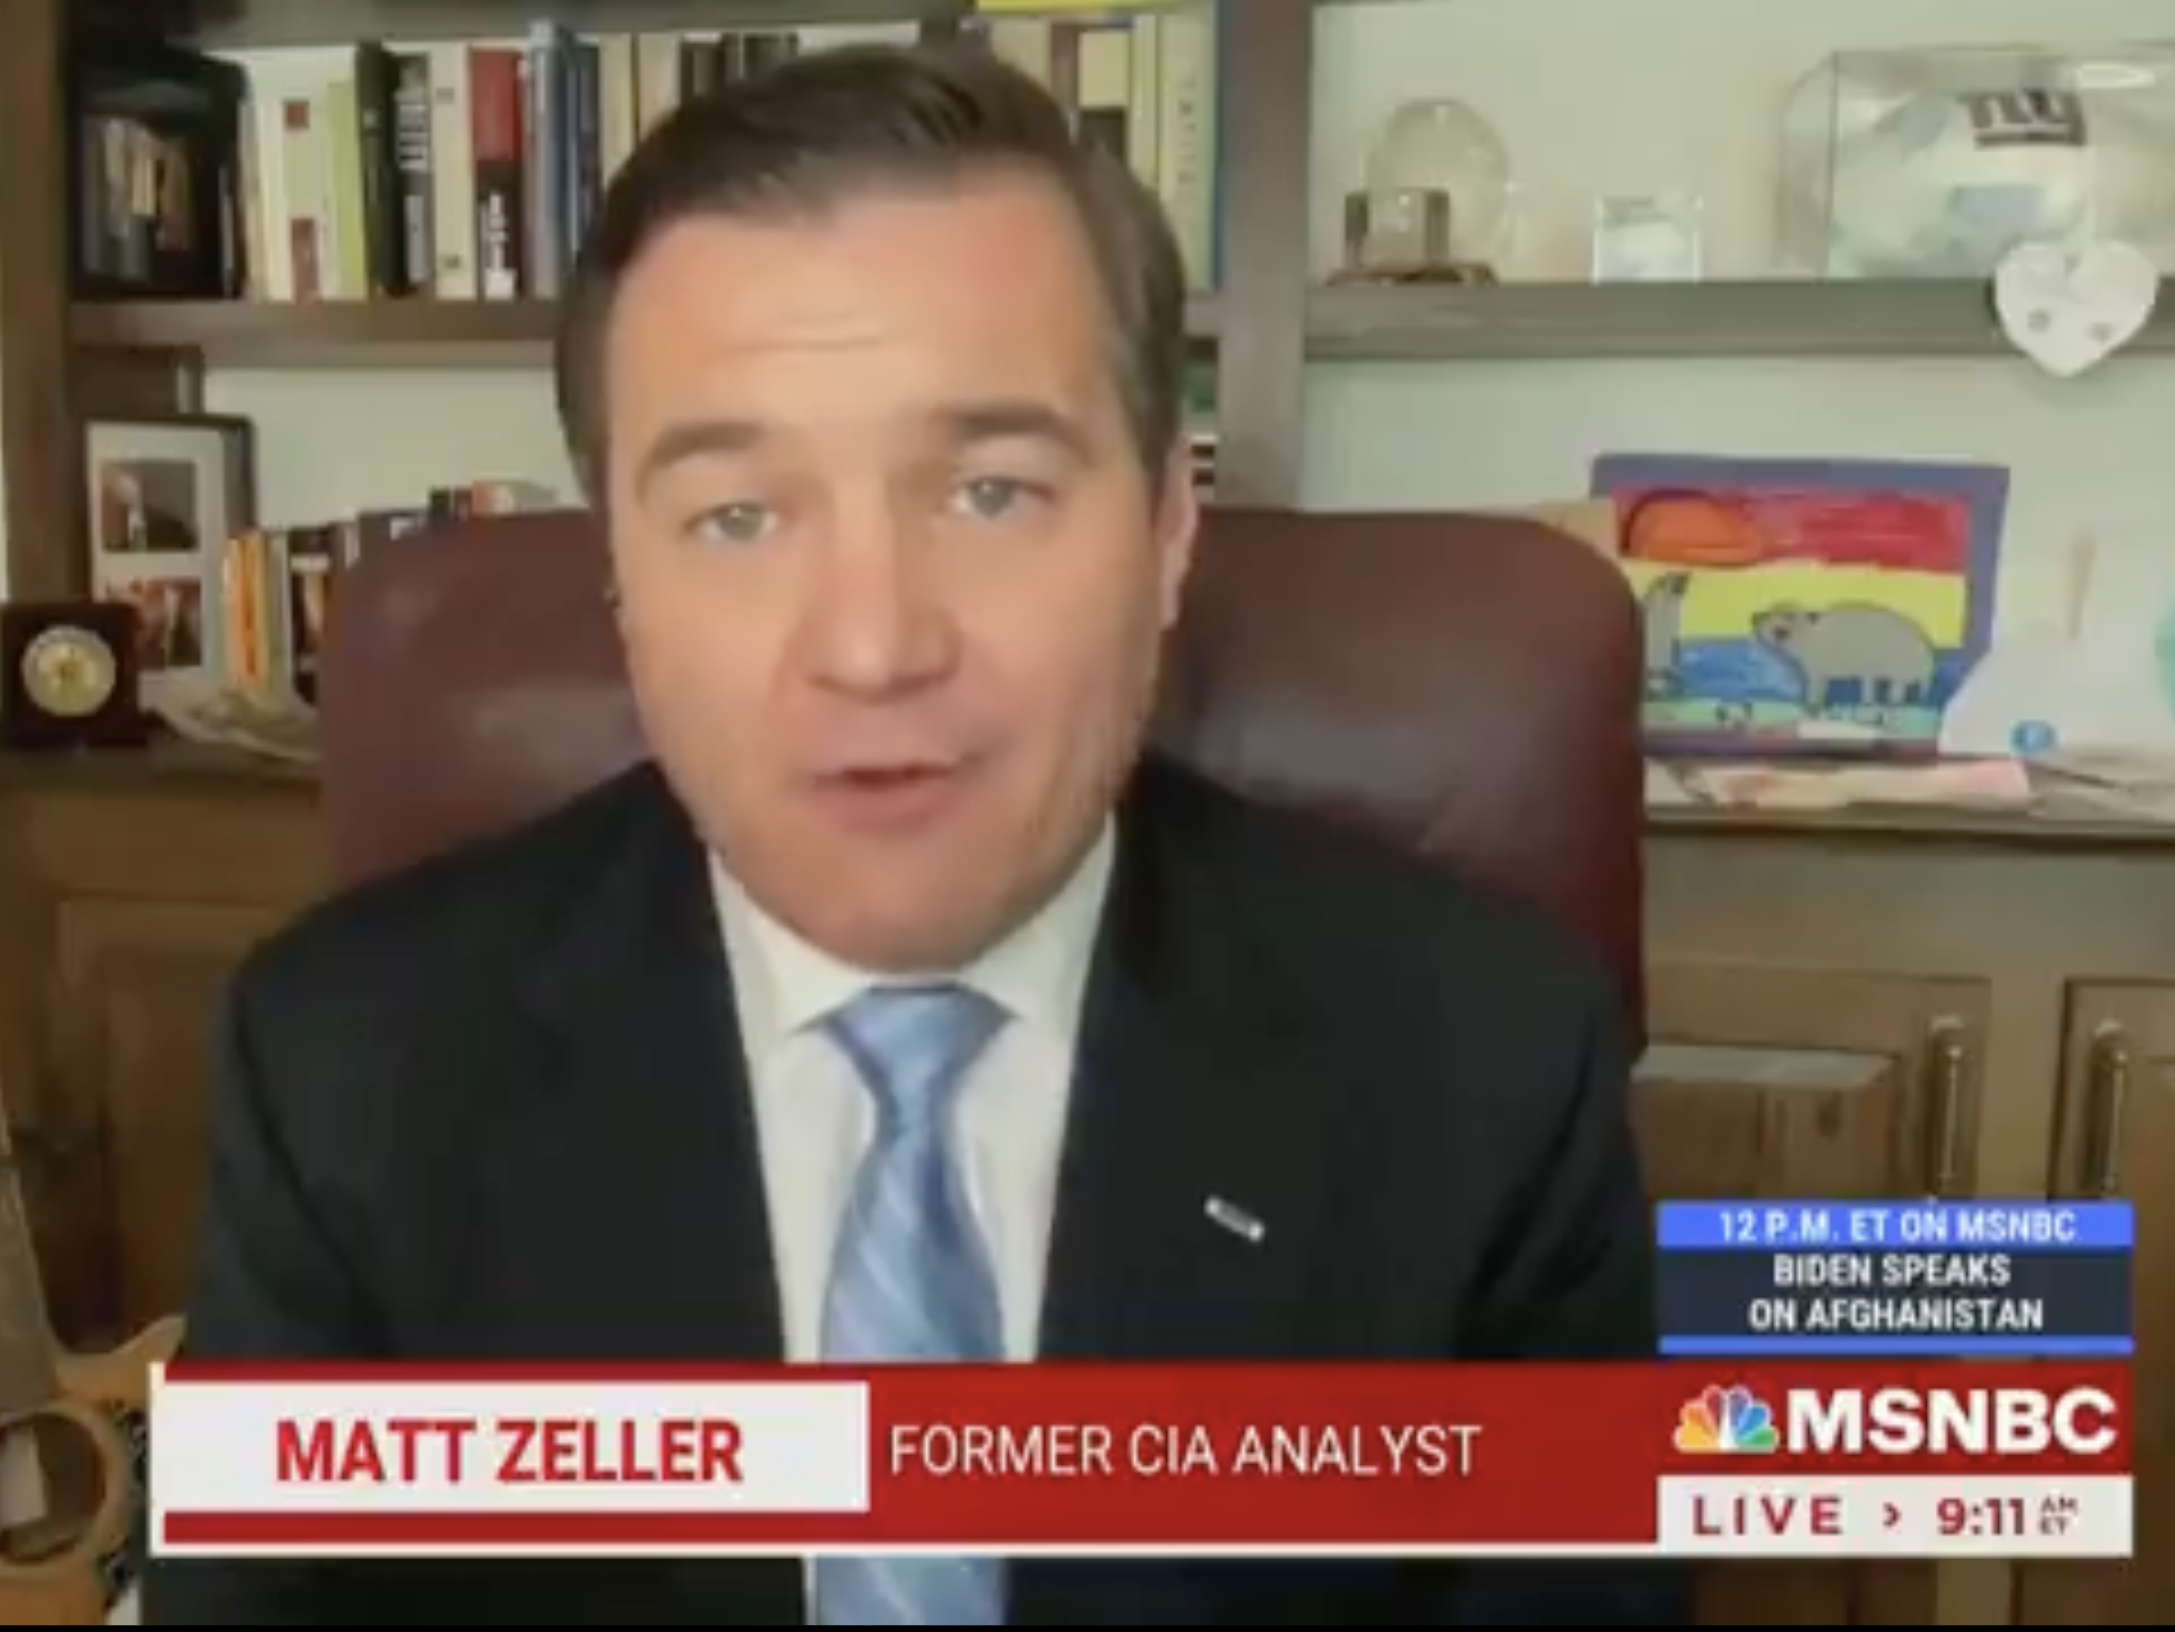 Afghanistan war veteran and ex-CIA analyst Matt Zeller speaks on MSNBC